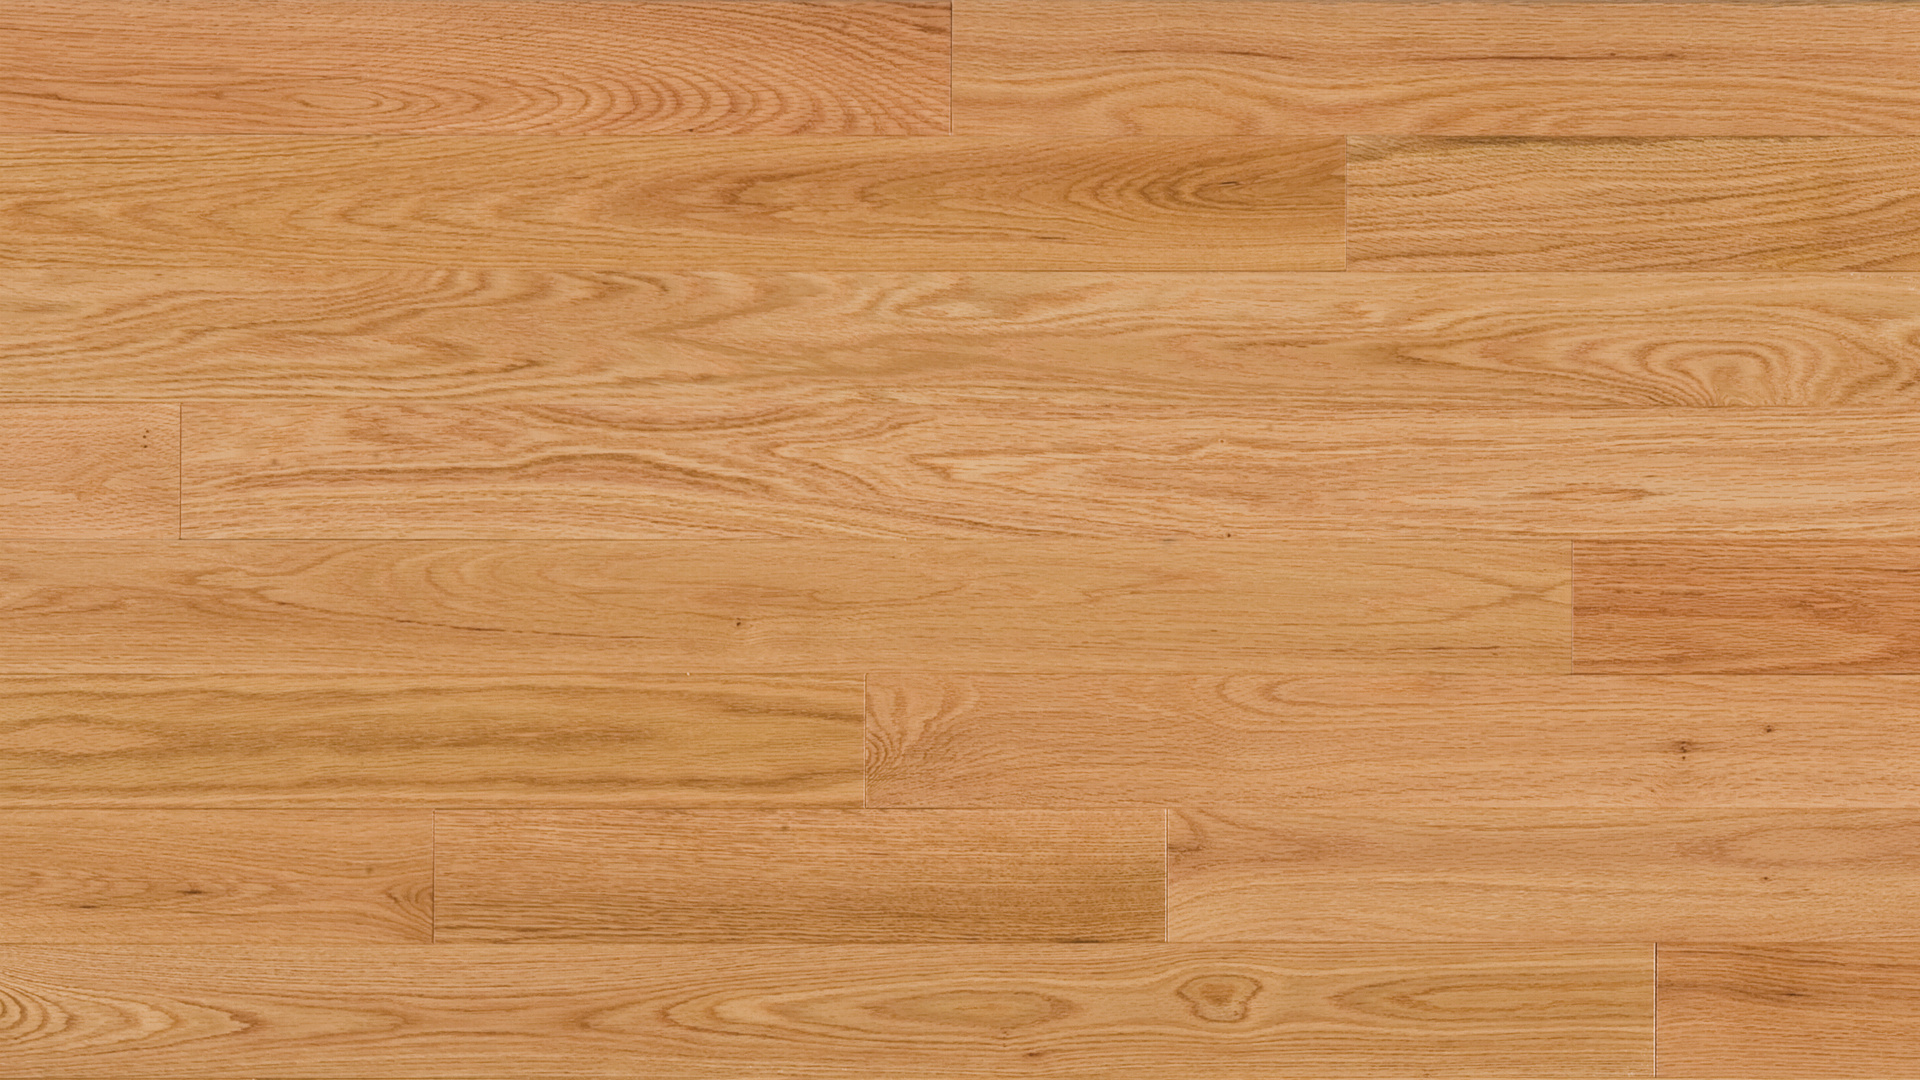 Hardwood Floor, Canadian hardwood floors, Quality craftsmanship, Made in Canada, 1920x1080 Full HD Desktop